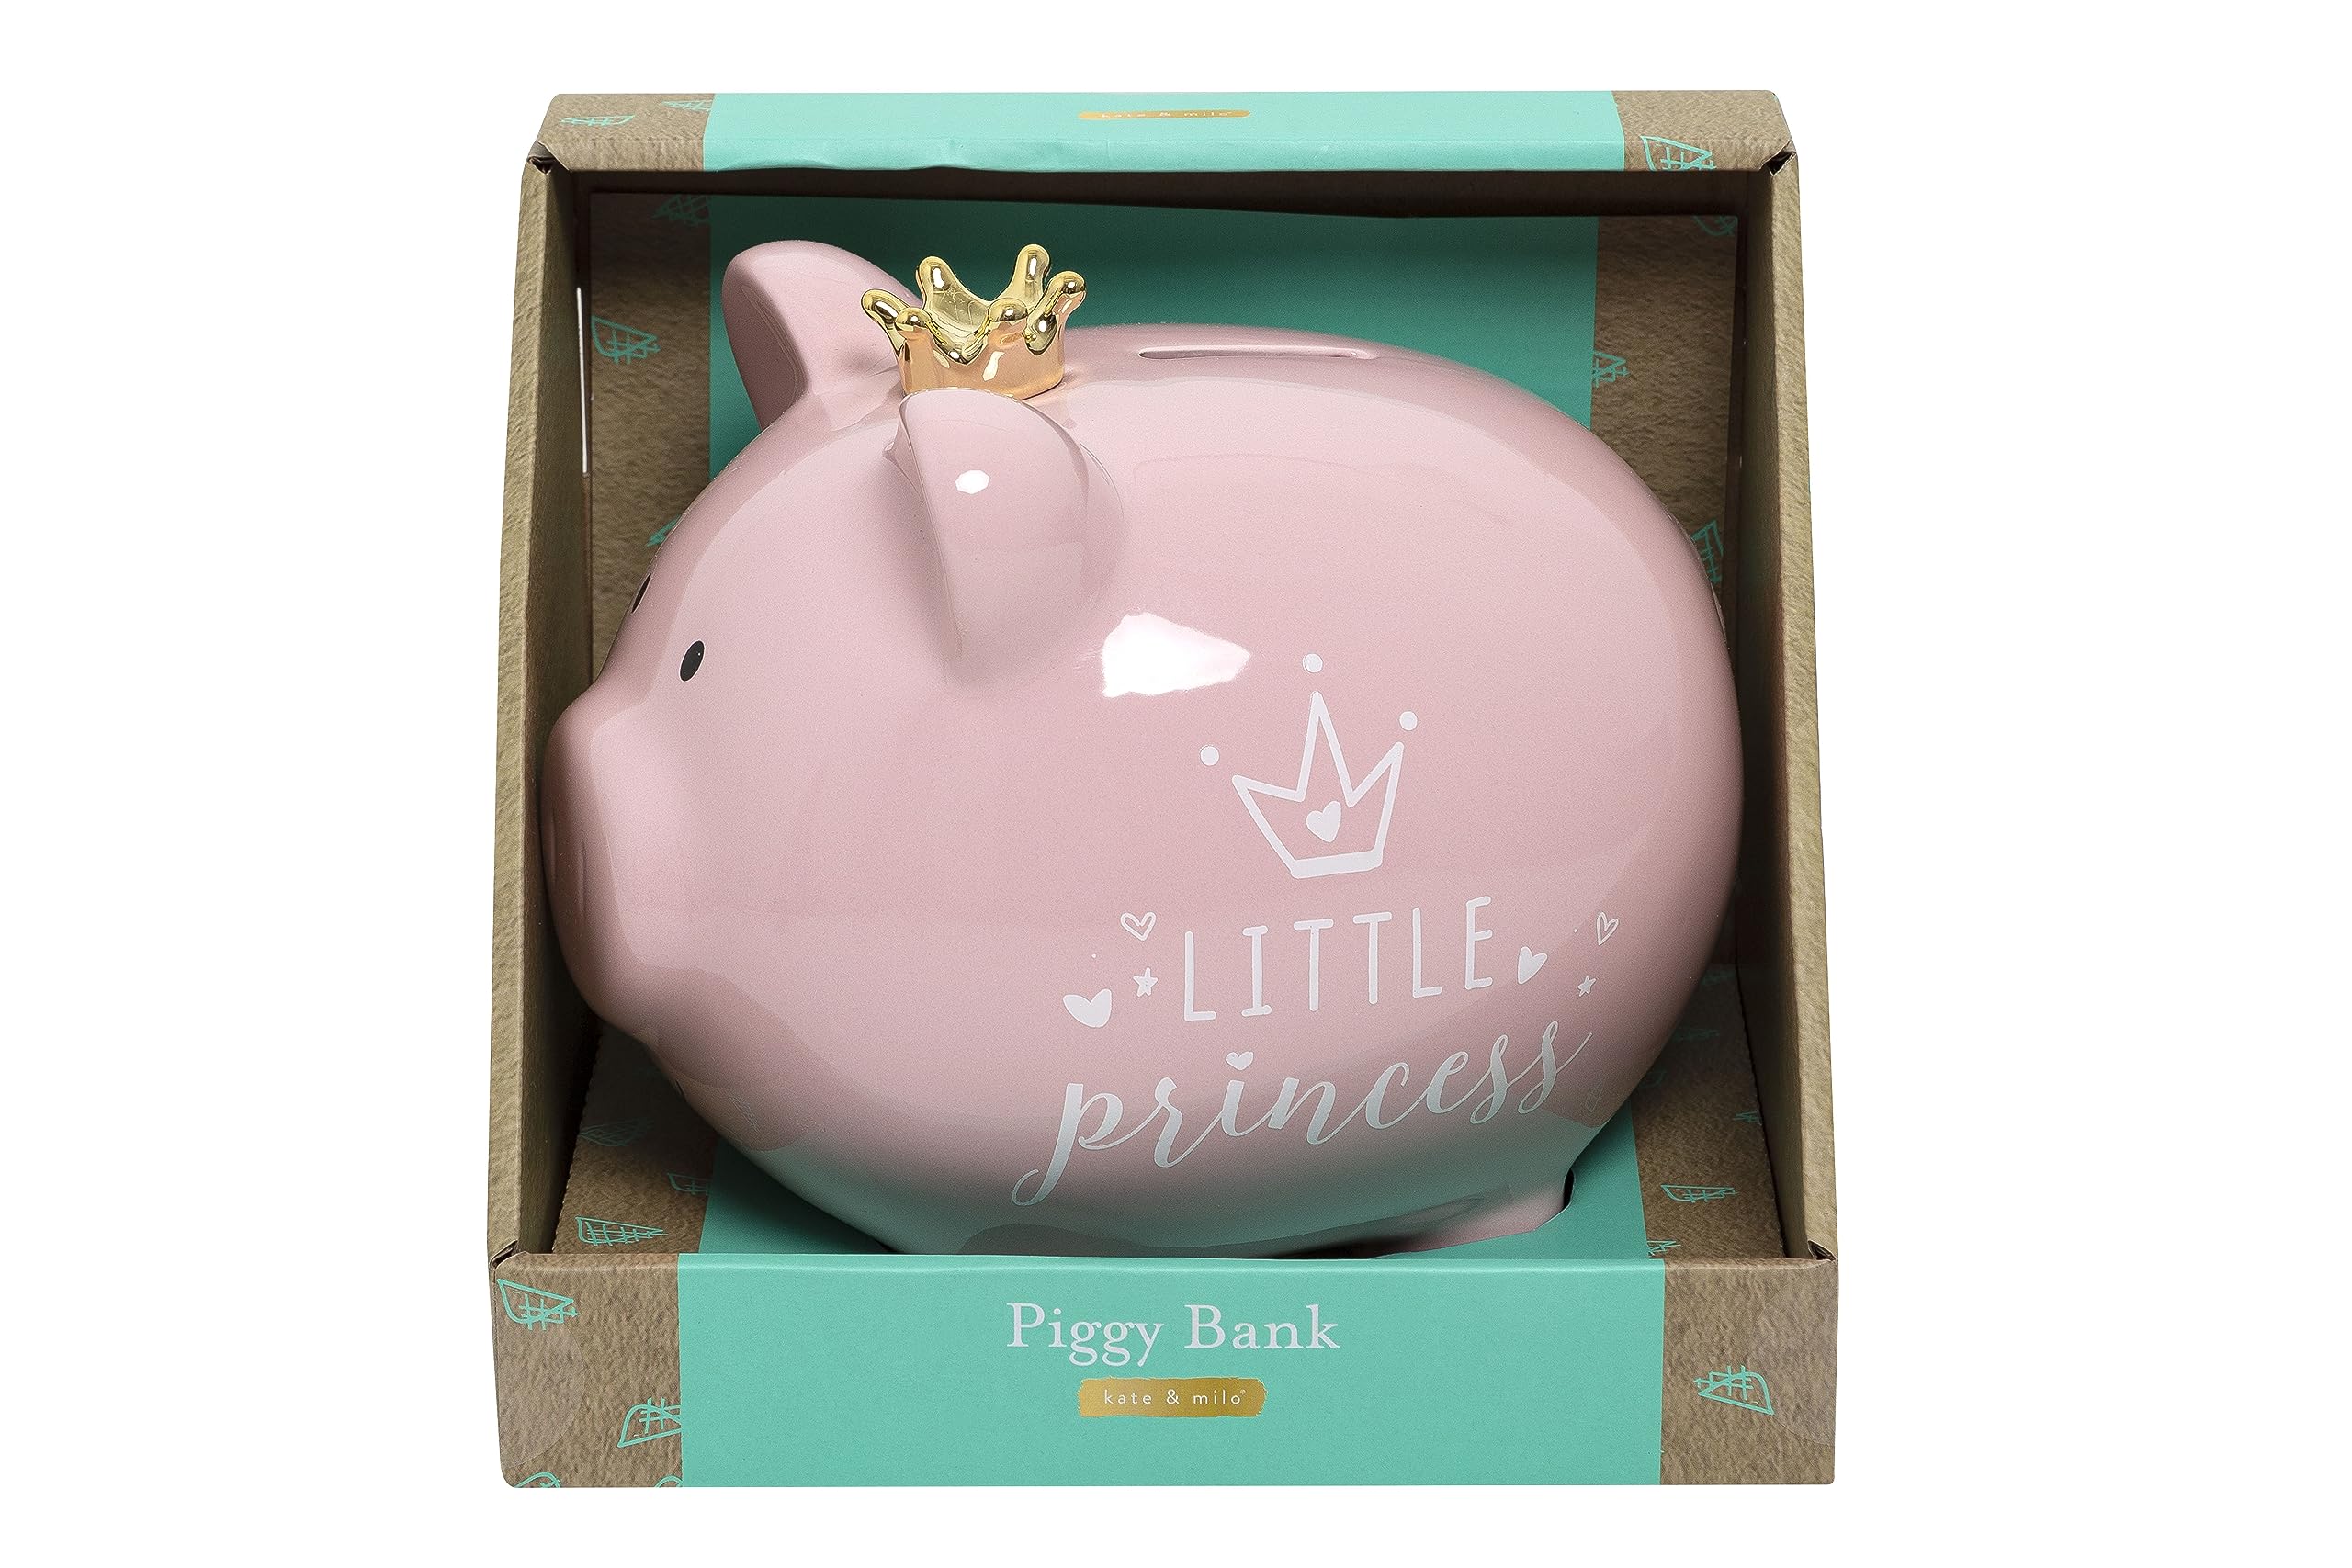 Kate & Milo Little Princess Piggy Bank with Crown, Newborn Keepsake Gift, Ceramic Money Bank For Kids, Baby Girl Nursery Décor, Pink